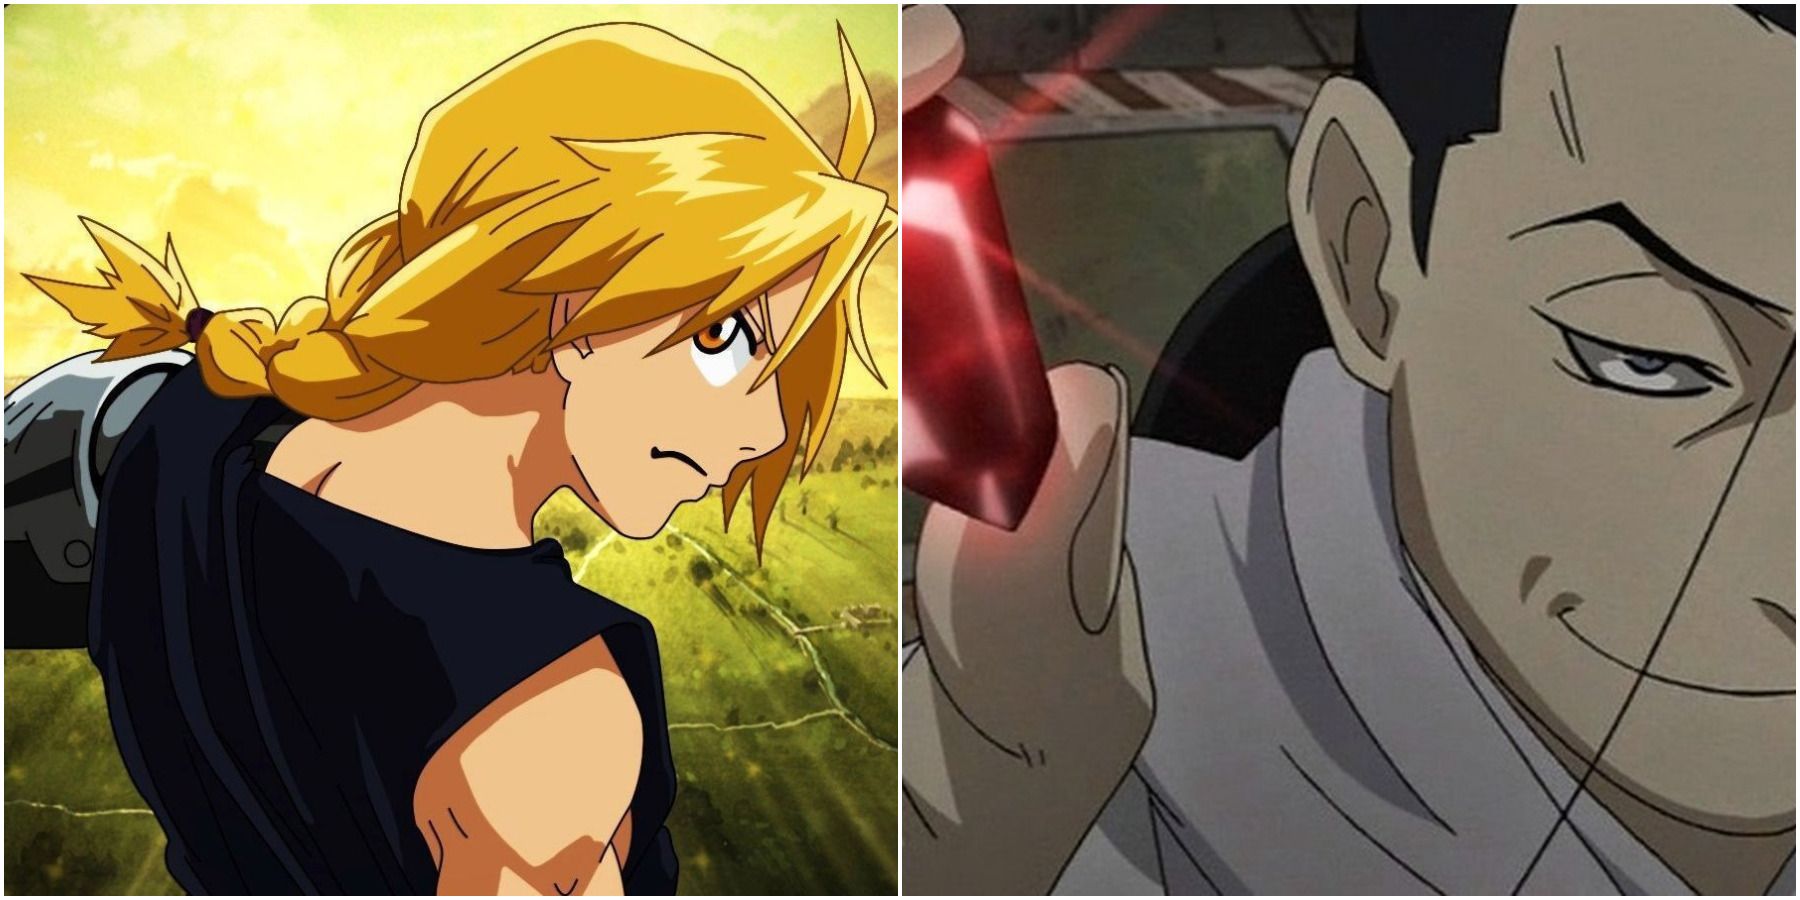 Edward Elric vs. Father  Fullmetal alchemist, Anime, Fullmetal alchemist  brotherhood